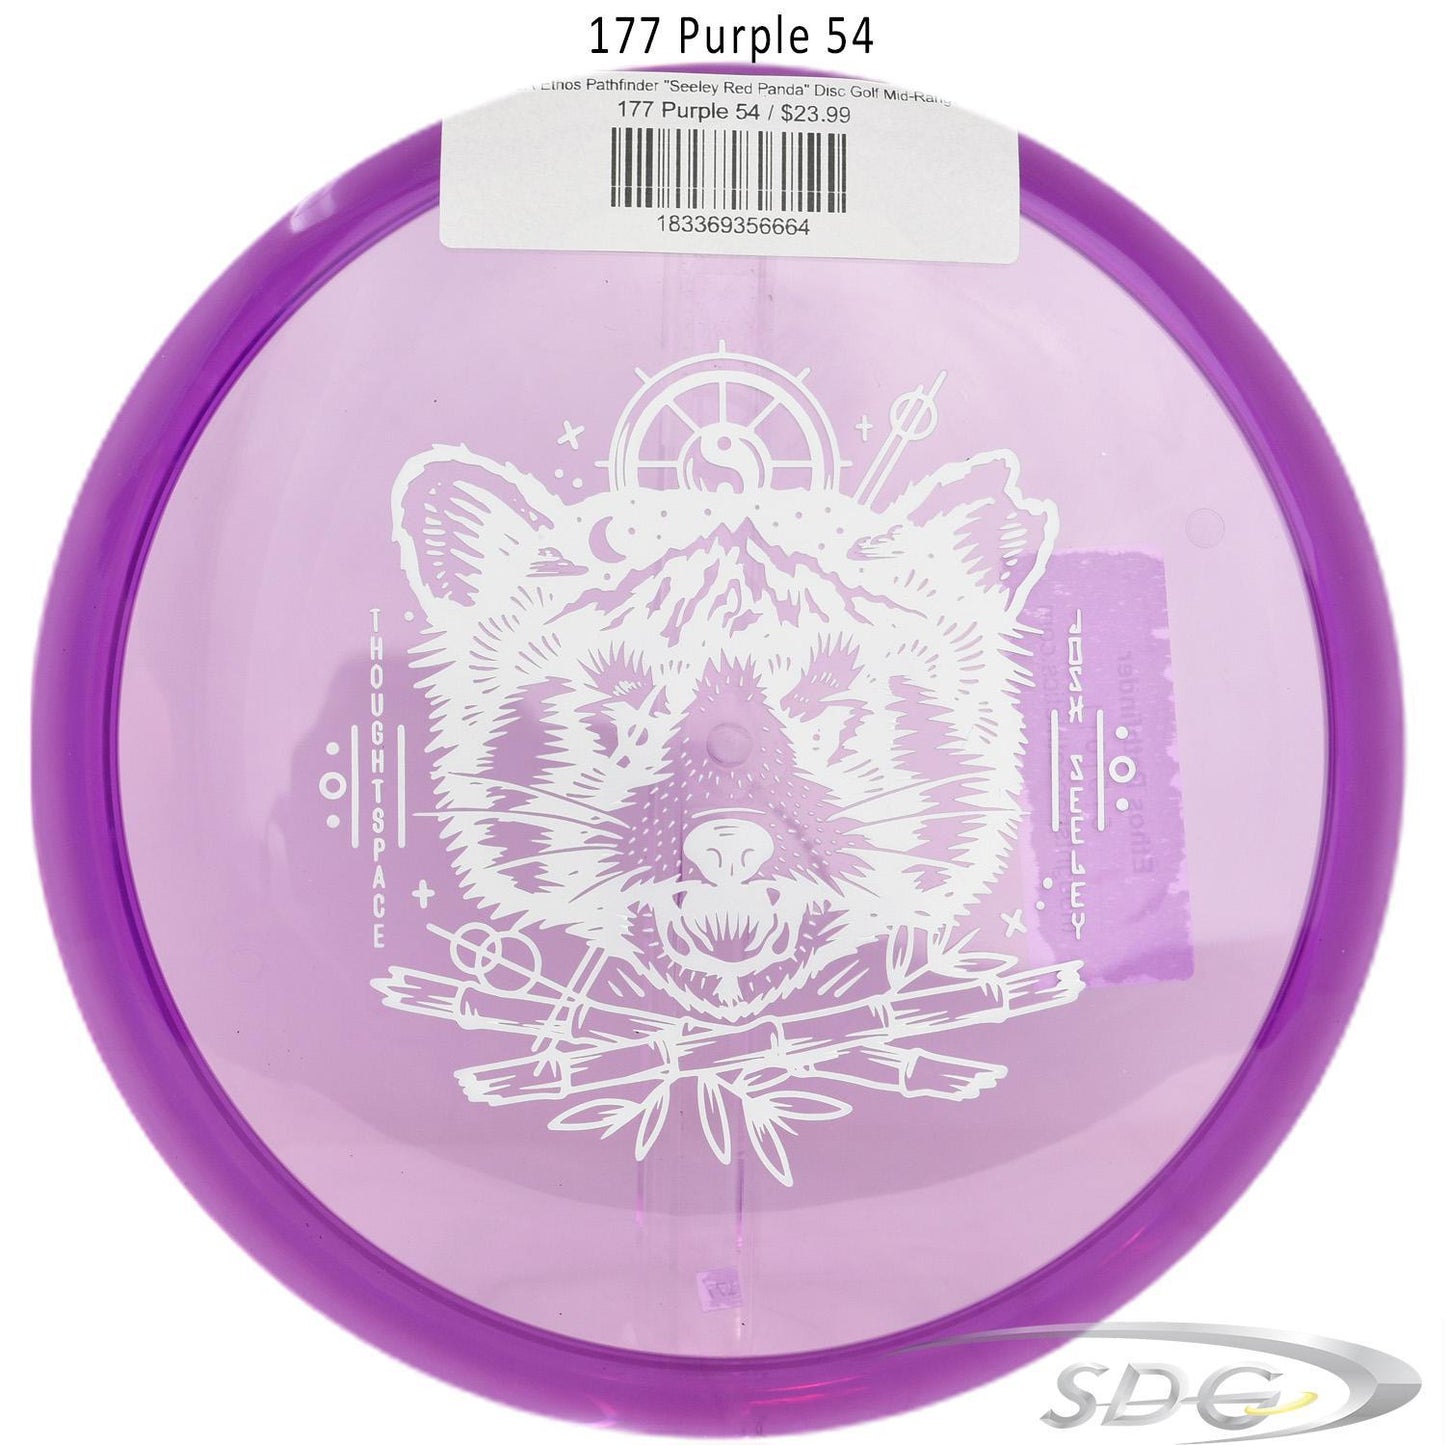 tsa-ethos-pathfinder-seeley-red-panda-disc-golf-mid-range 177 Purple 54 